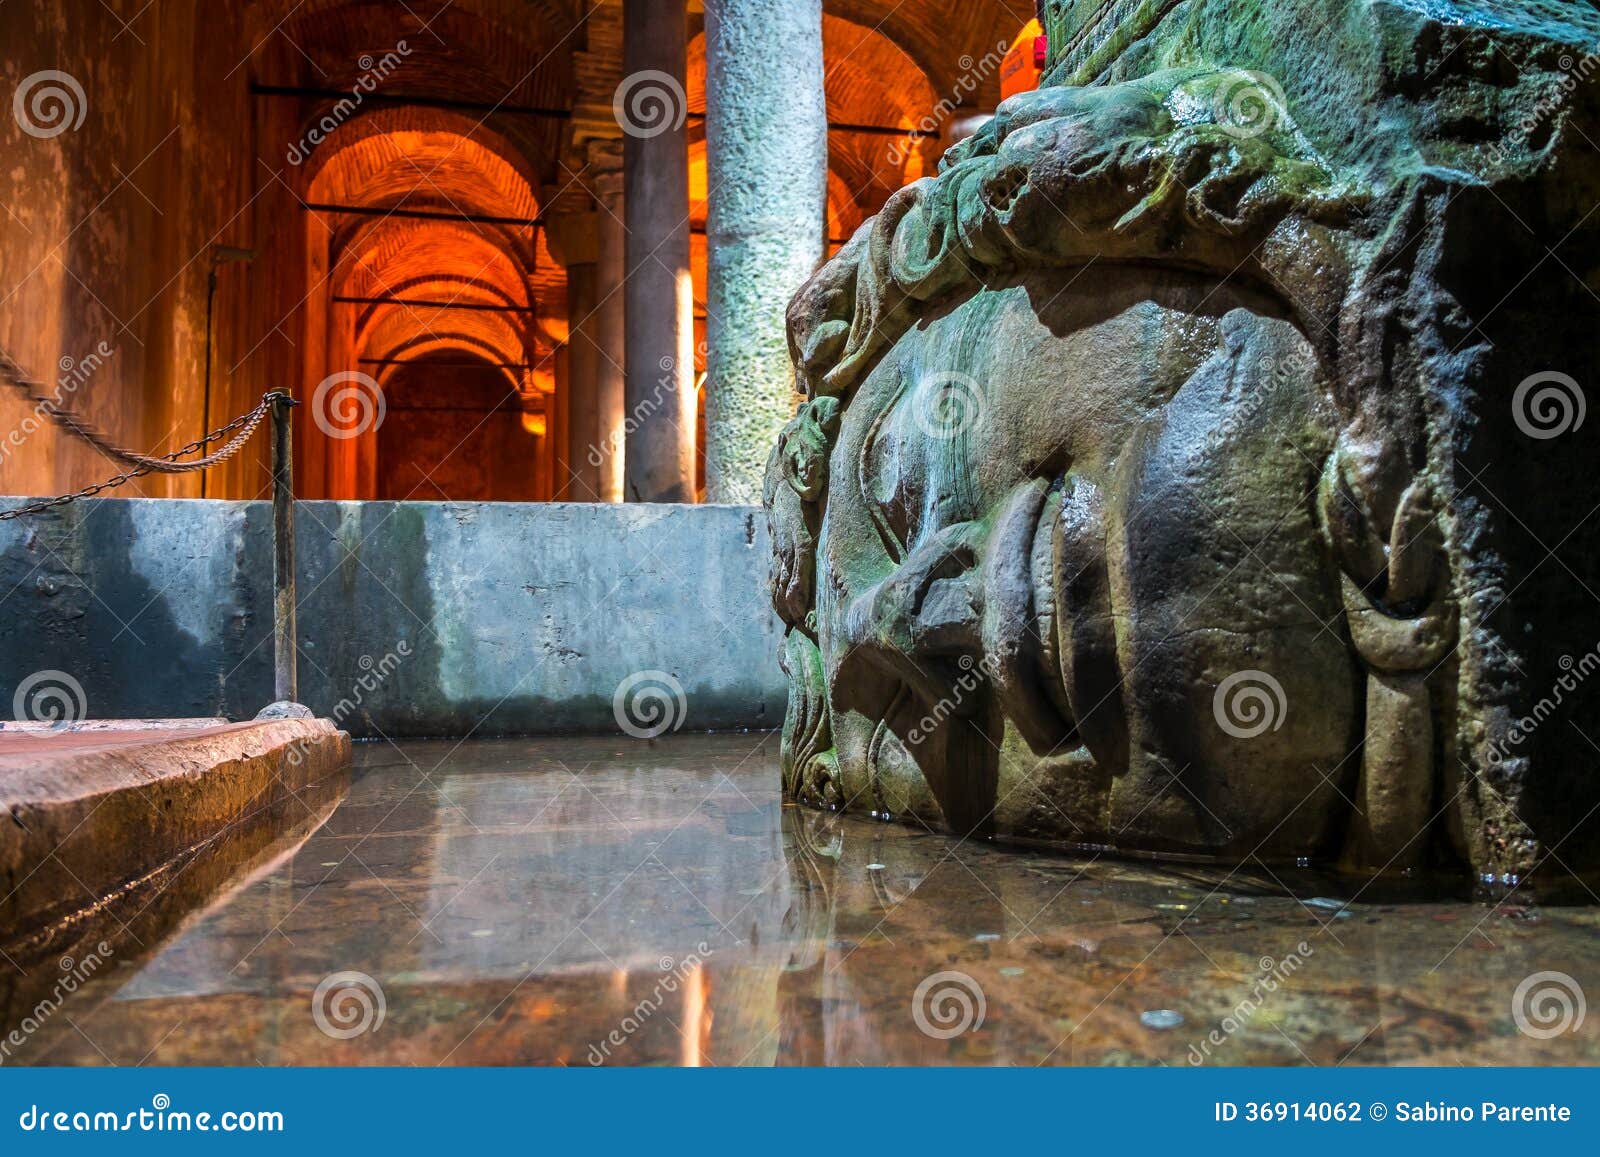 medusa, basilica cistern istanbul